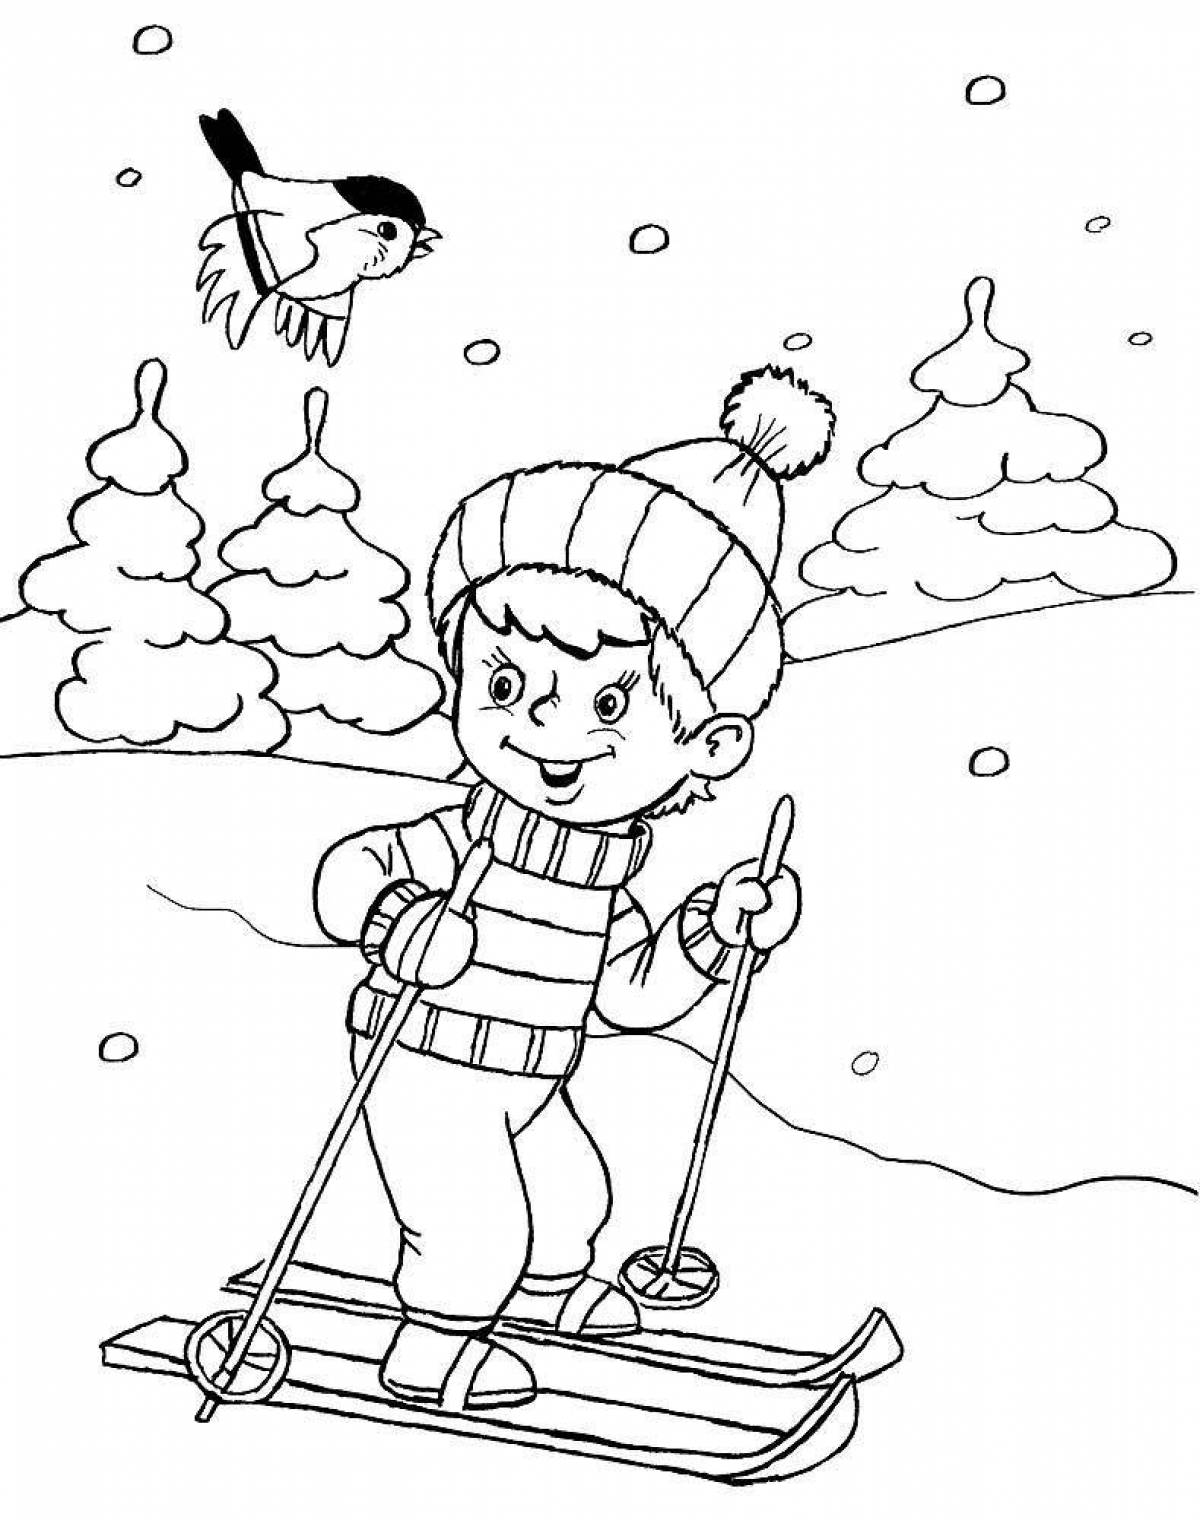 Great winter fun coloring book for kids